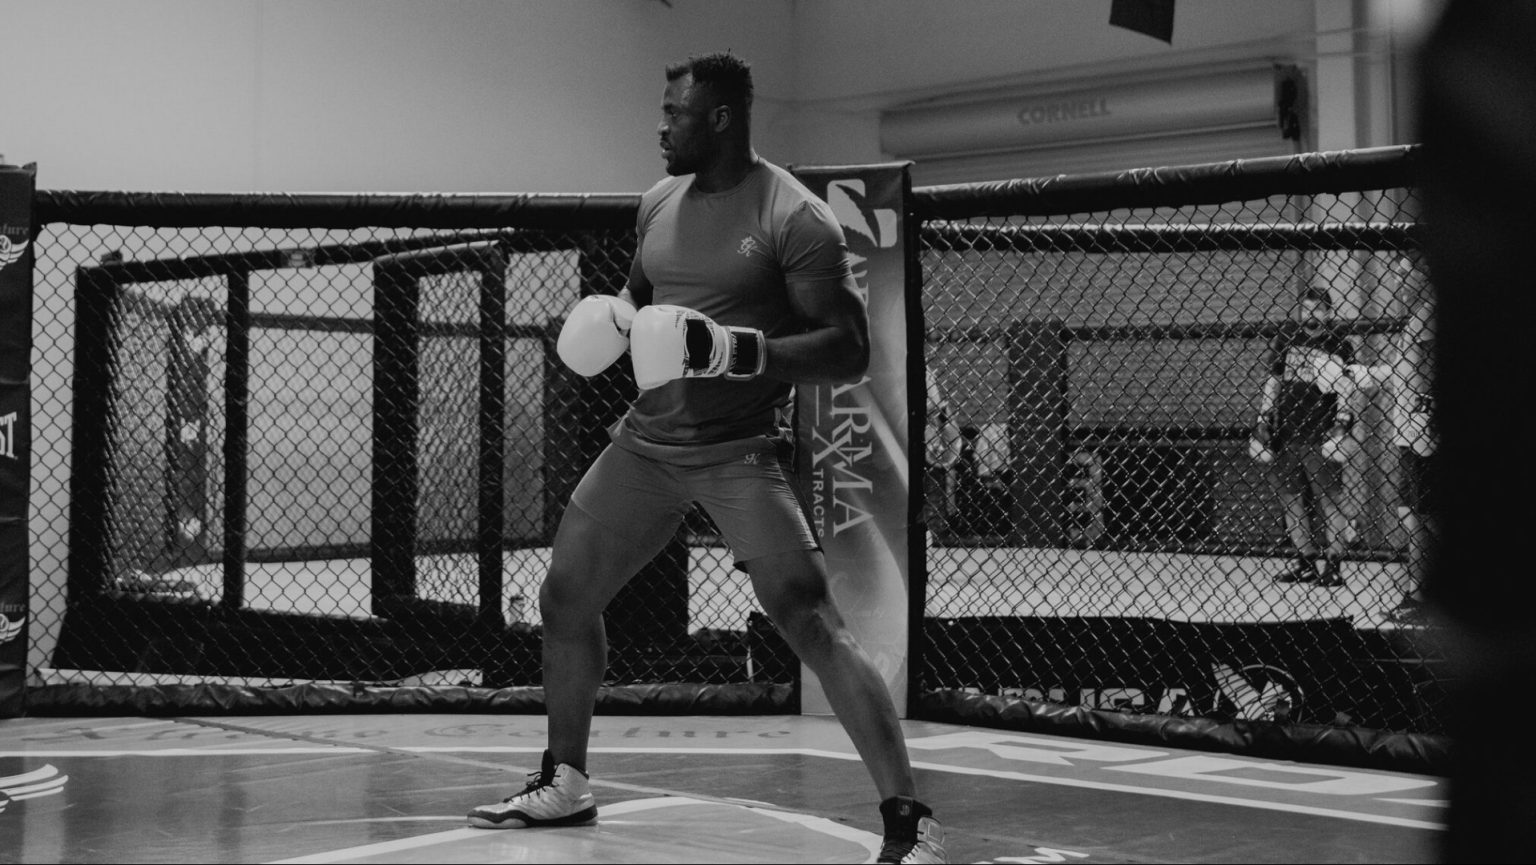 Reigning Heavyweight Champion Francis Ngannou Escapes From the UFC! Dana White, Tyson Fury “The Gypsy King”, Jon “Bones” Jones, Ciryl Gane "Bon Gamin"